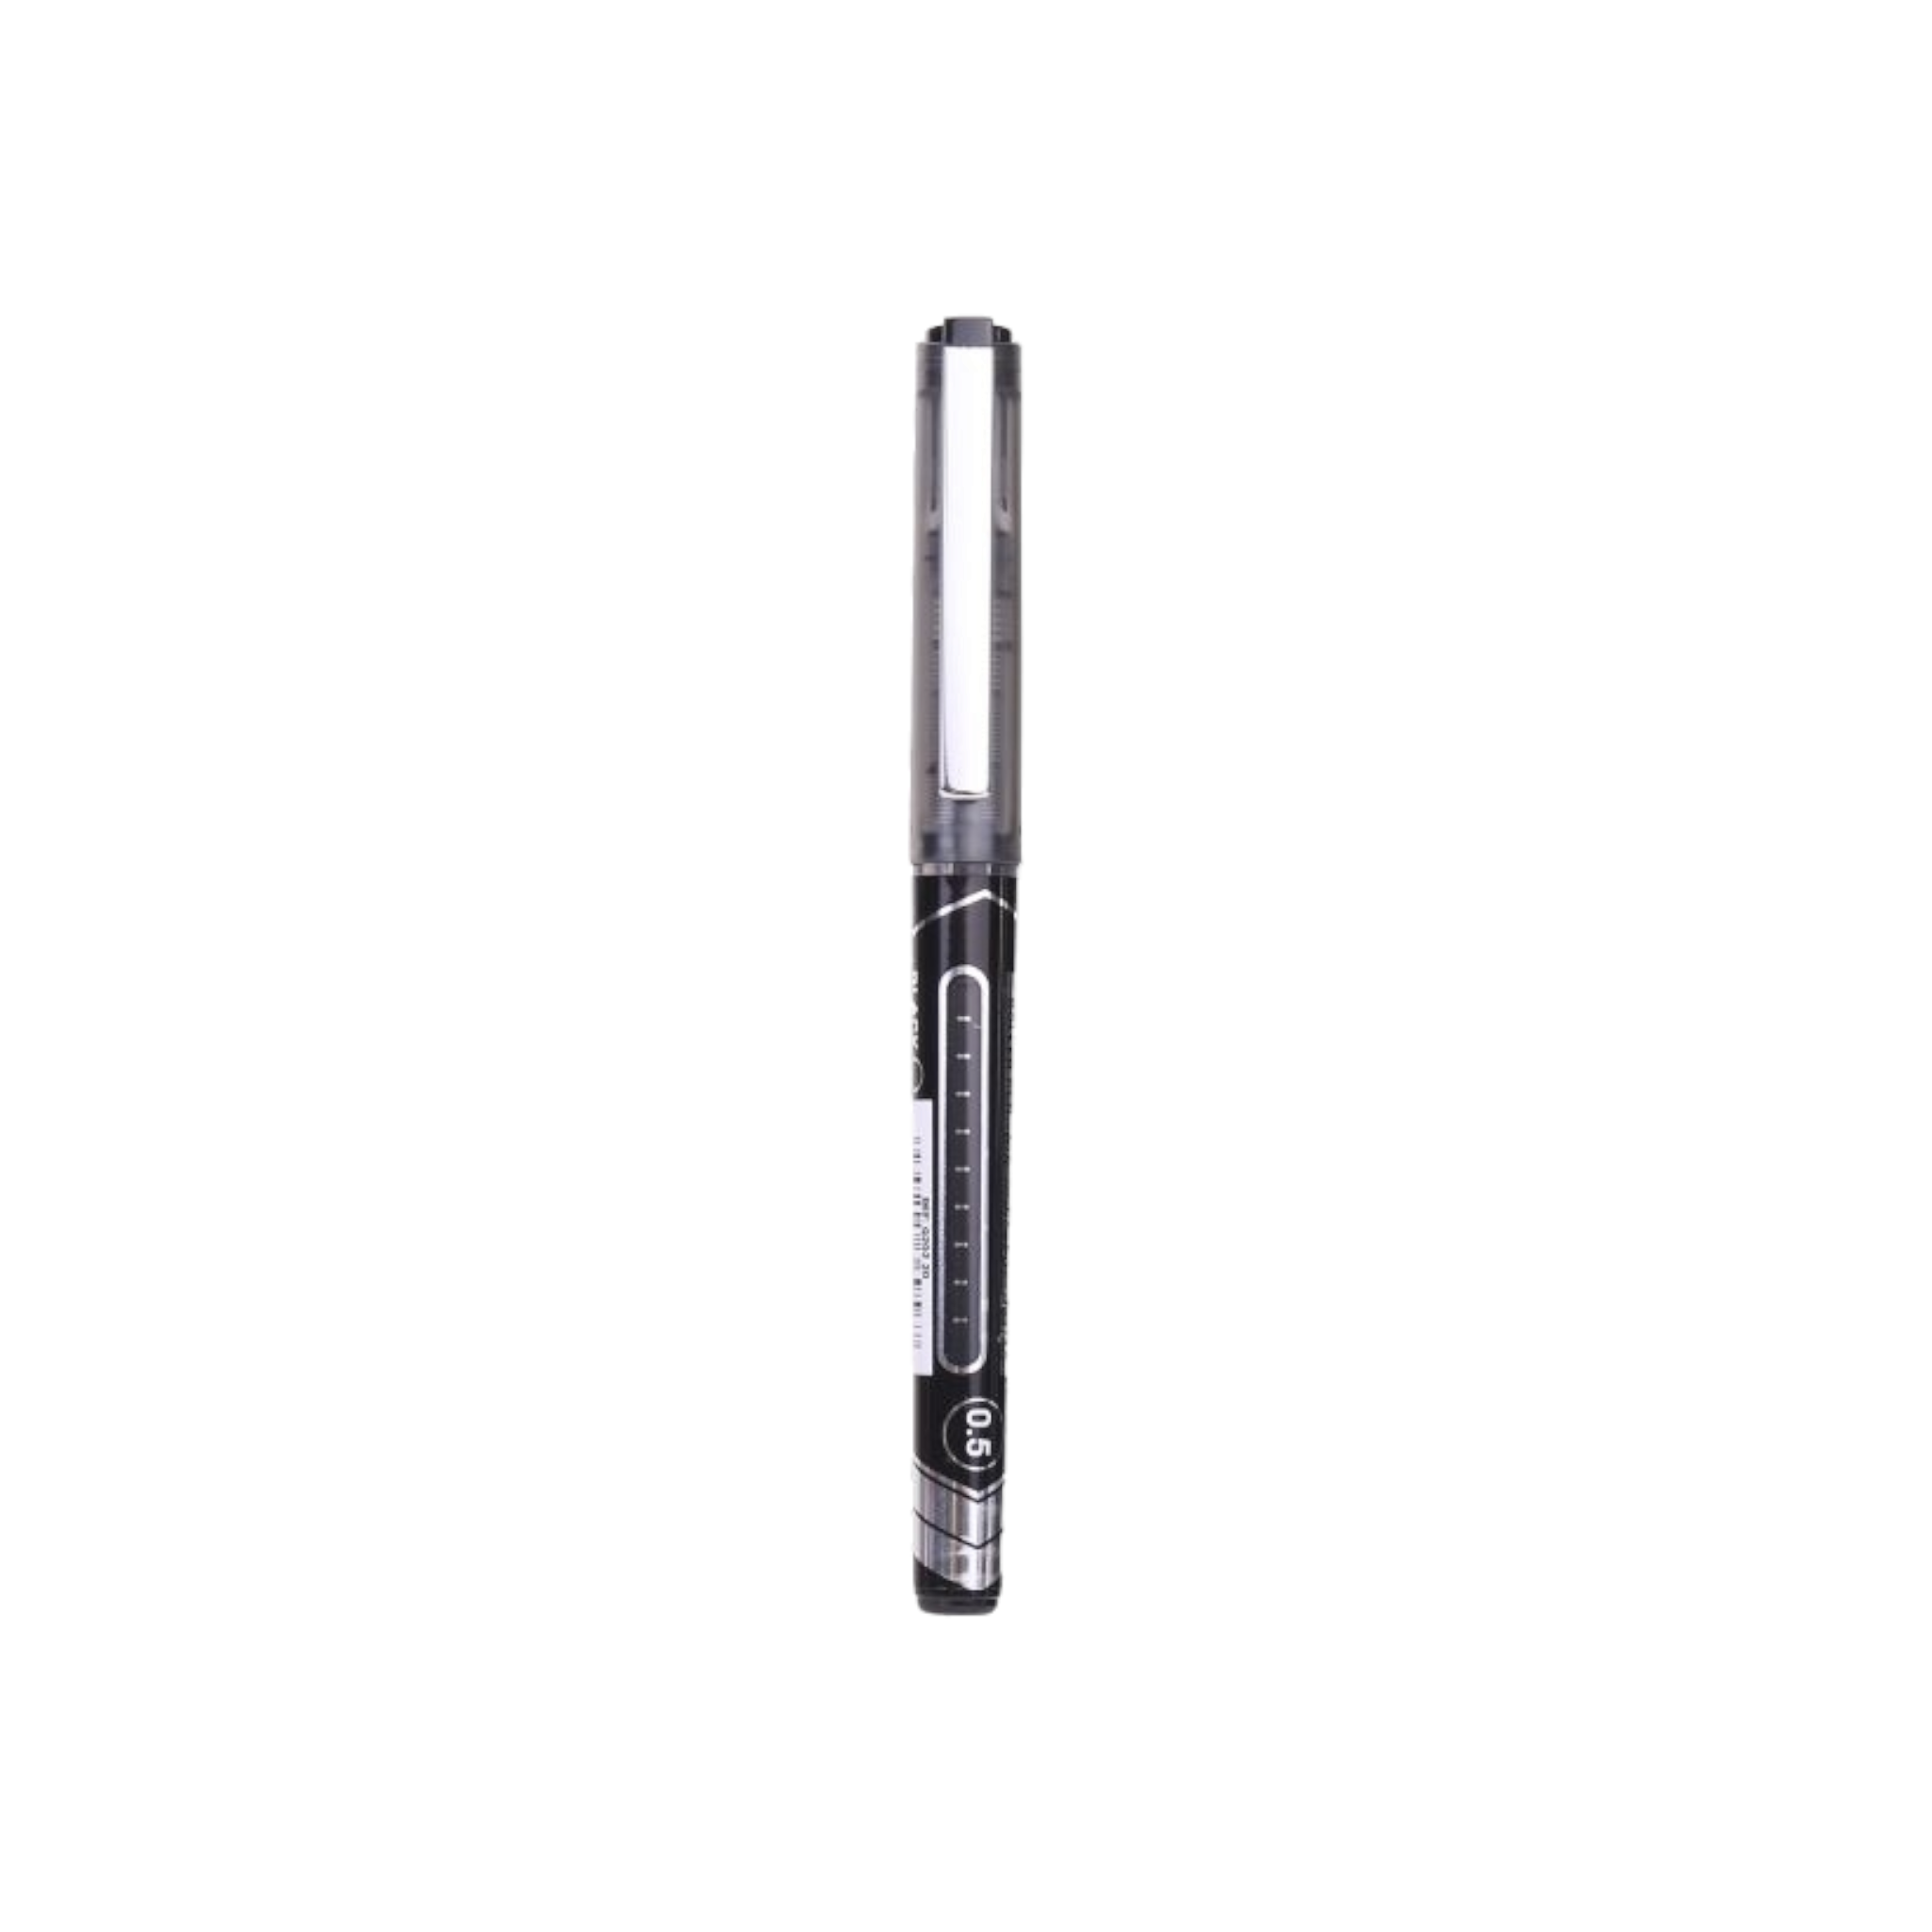 Deli Mate Roller Pen 0.5mm Black Ink Deli